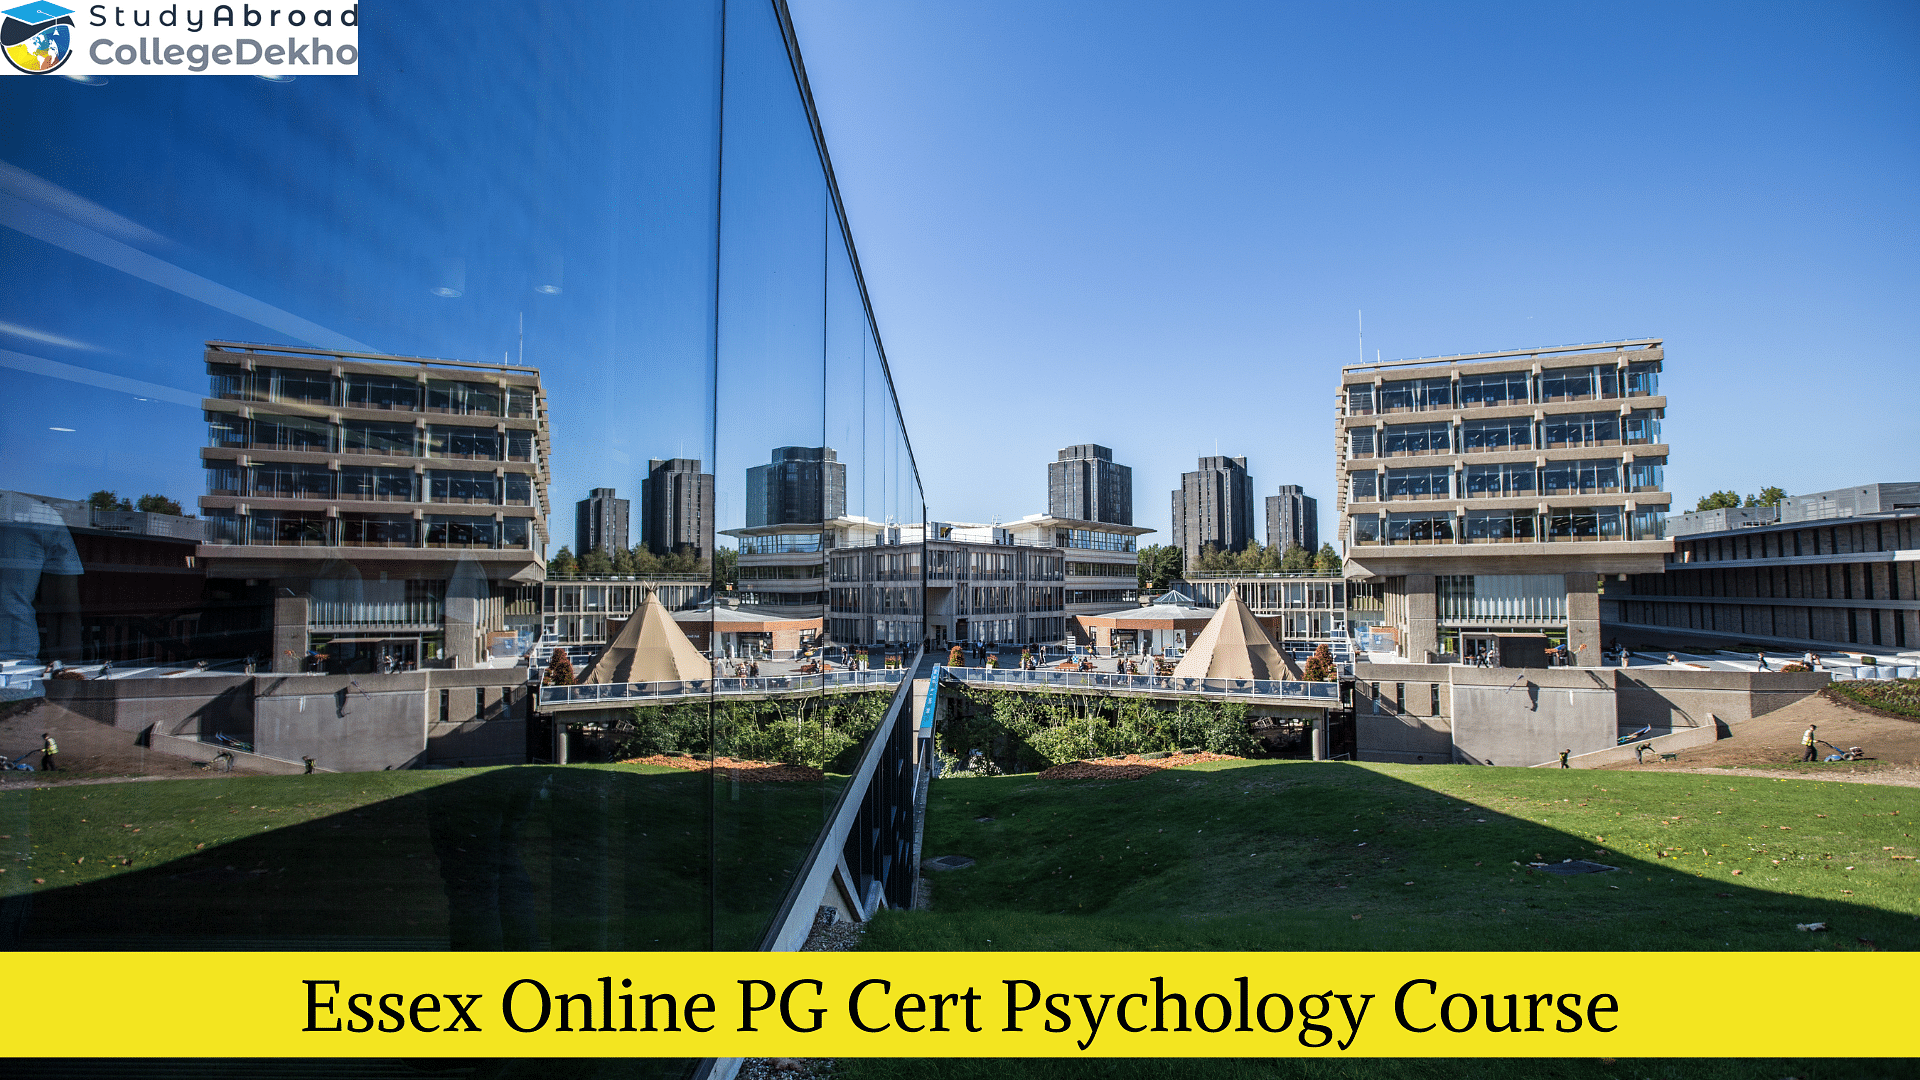 Essex Online PG Cert Psychology Course